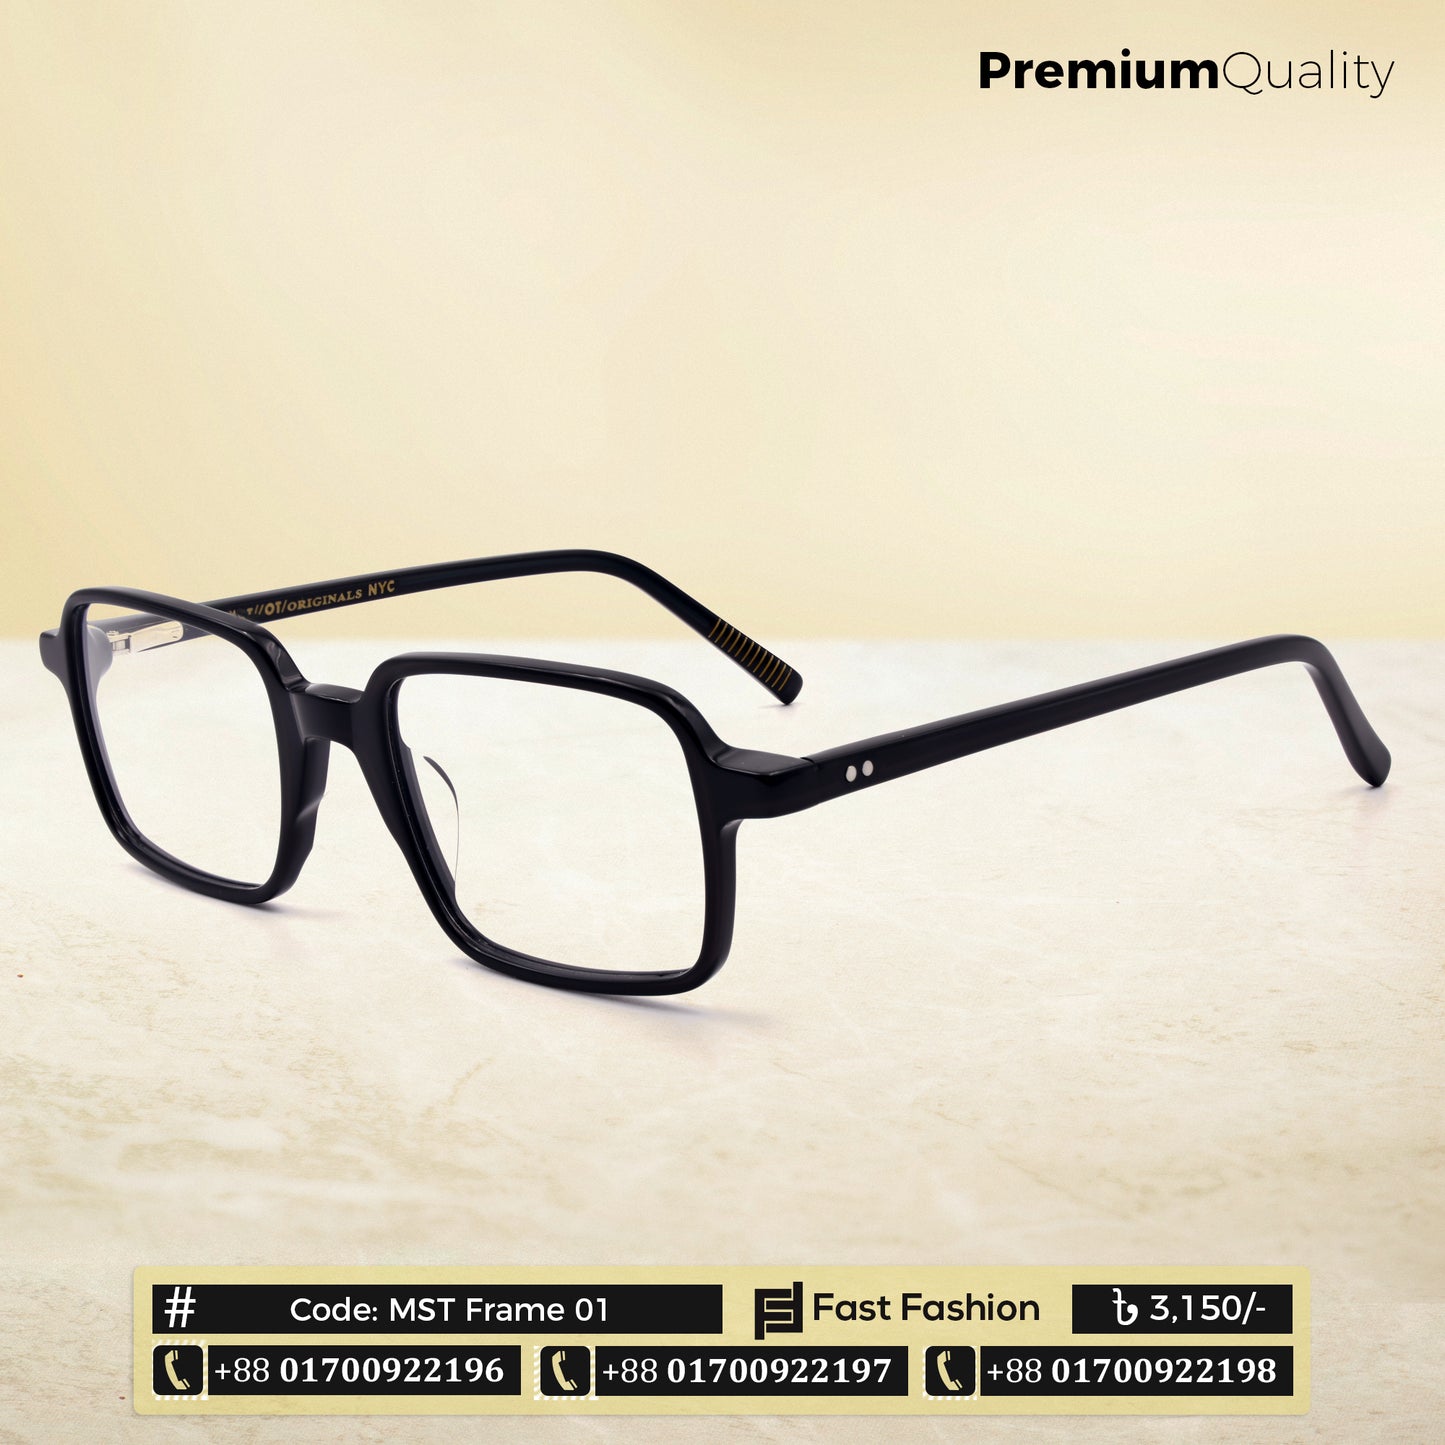 Luxury Modern Looking Trendy Stylish Optic Frame | MST Frame 01